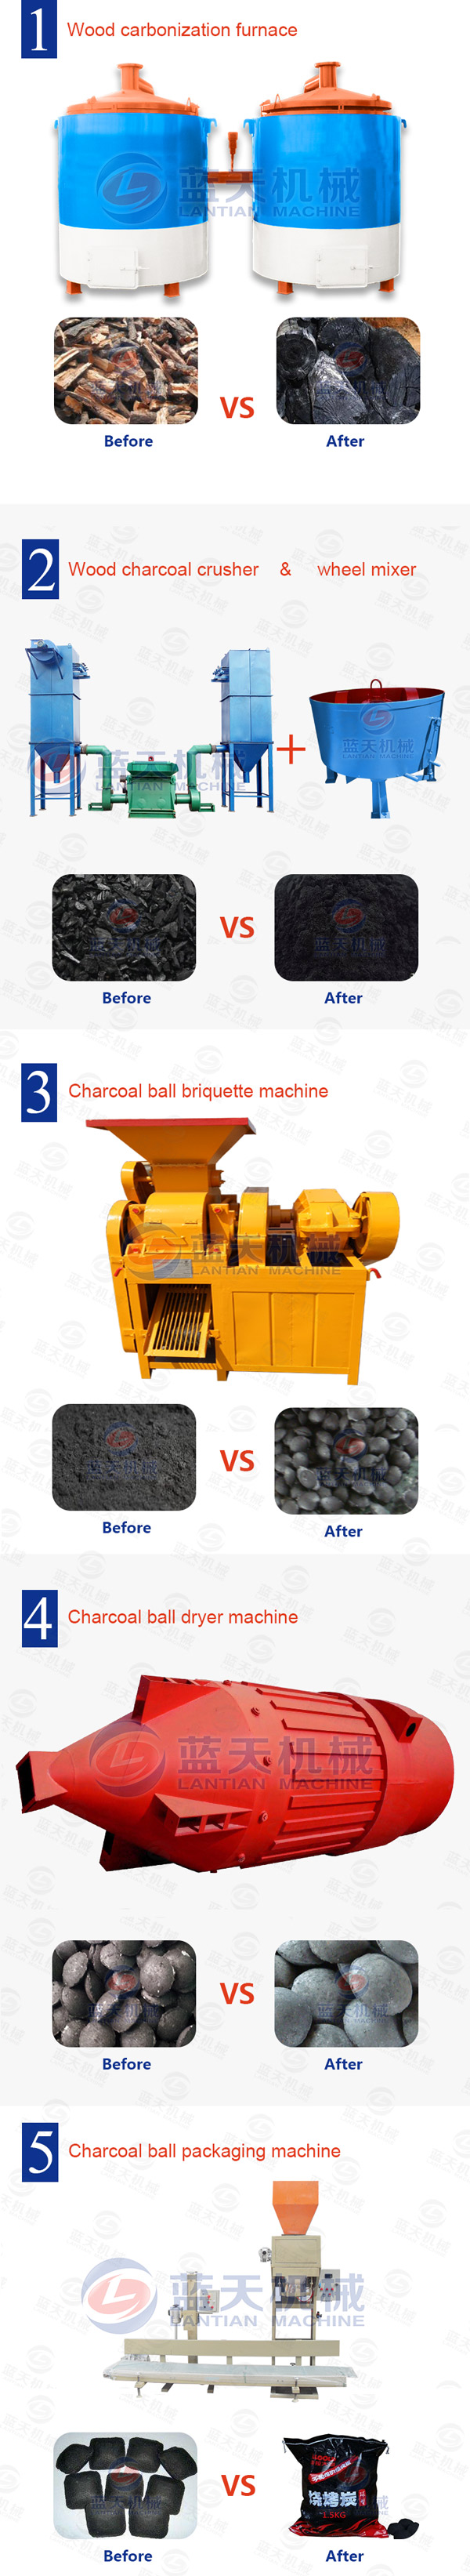 charcoal ball briquette equipment